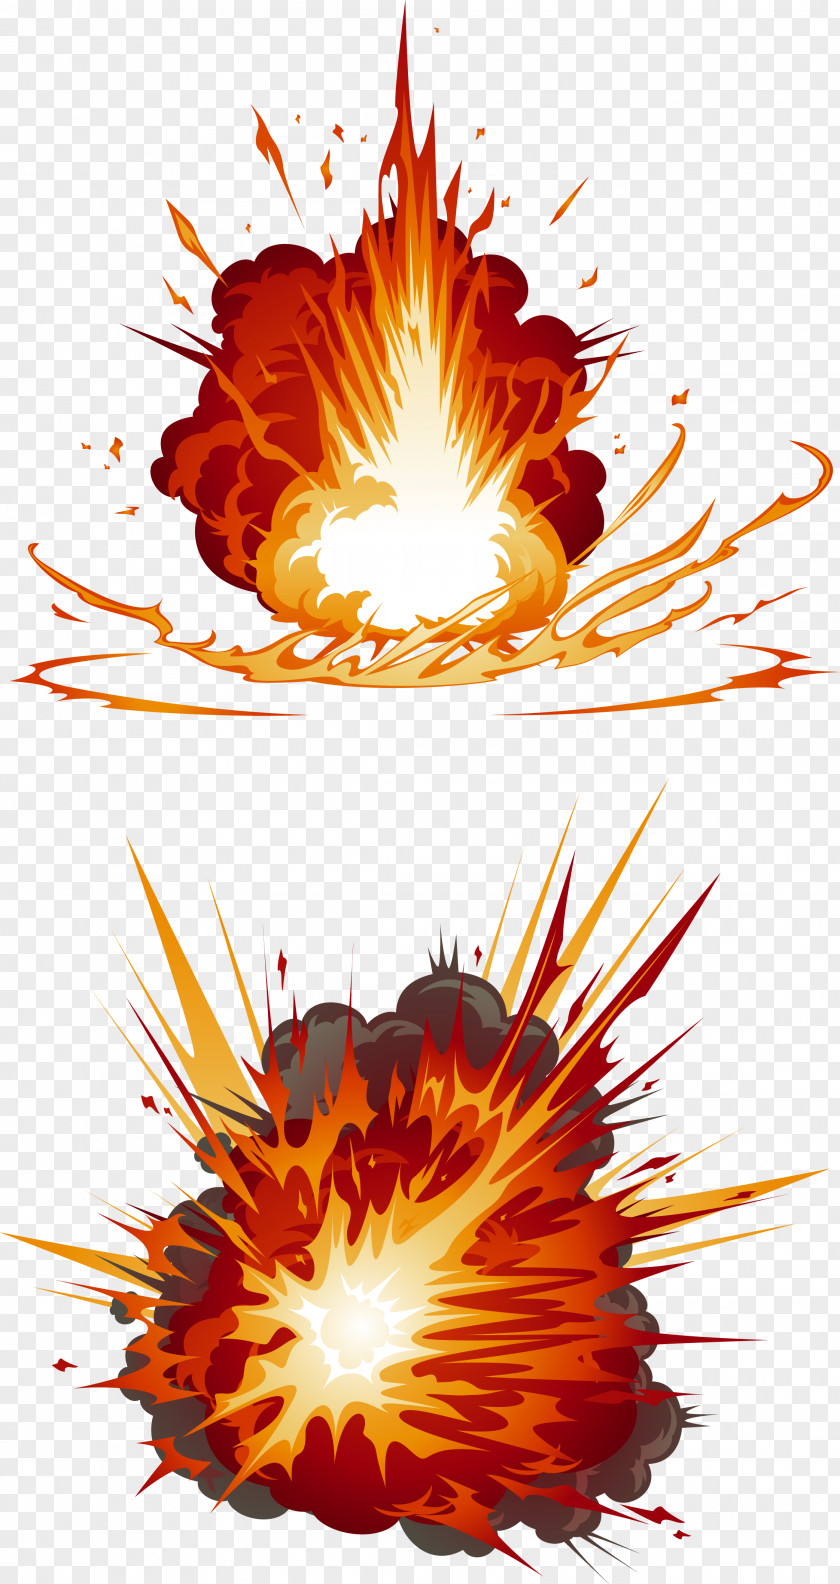 Explosions Blast!Blast!Blast!My Explosion Firecracker PNG